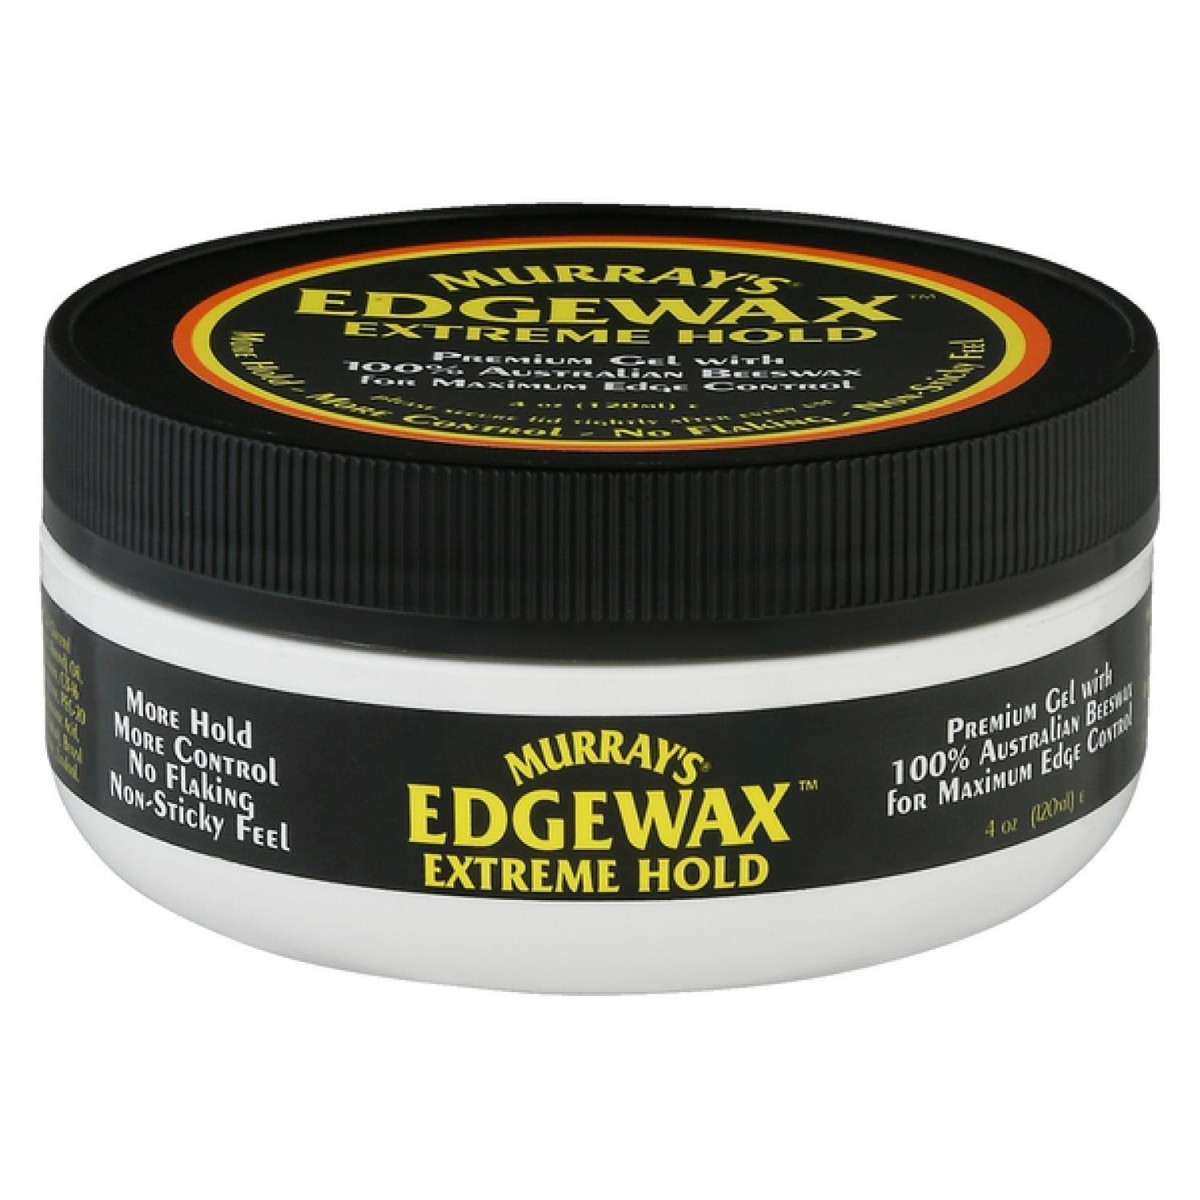 3) Murray's Edgewax Hair Dressing Premium Gel with 100% Australian